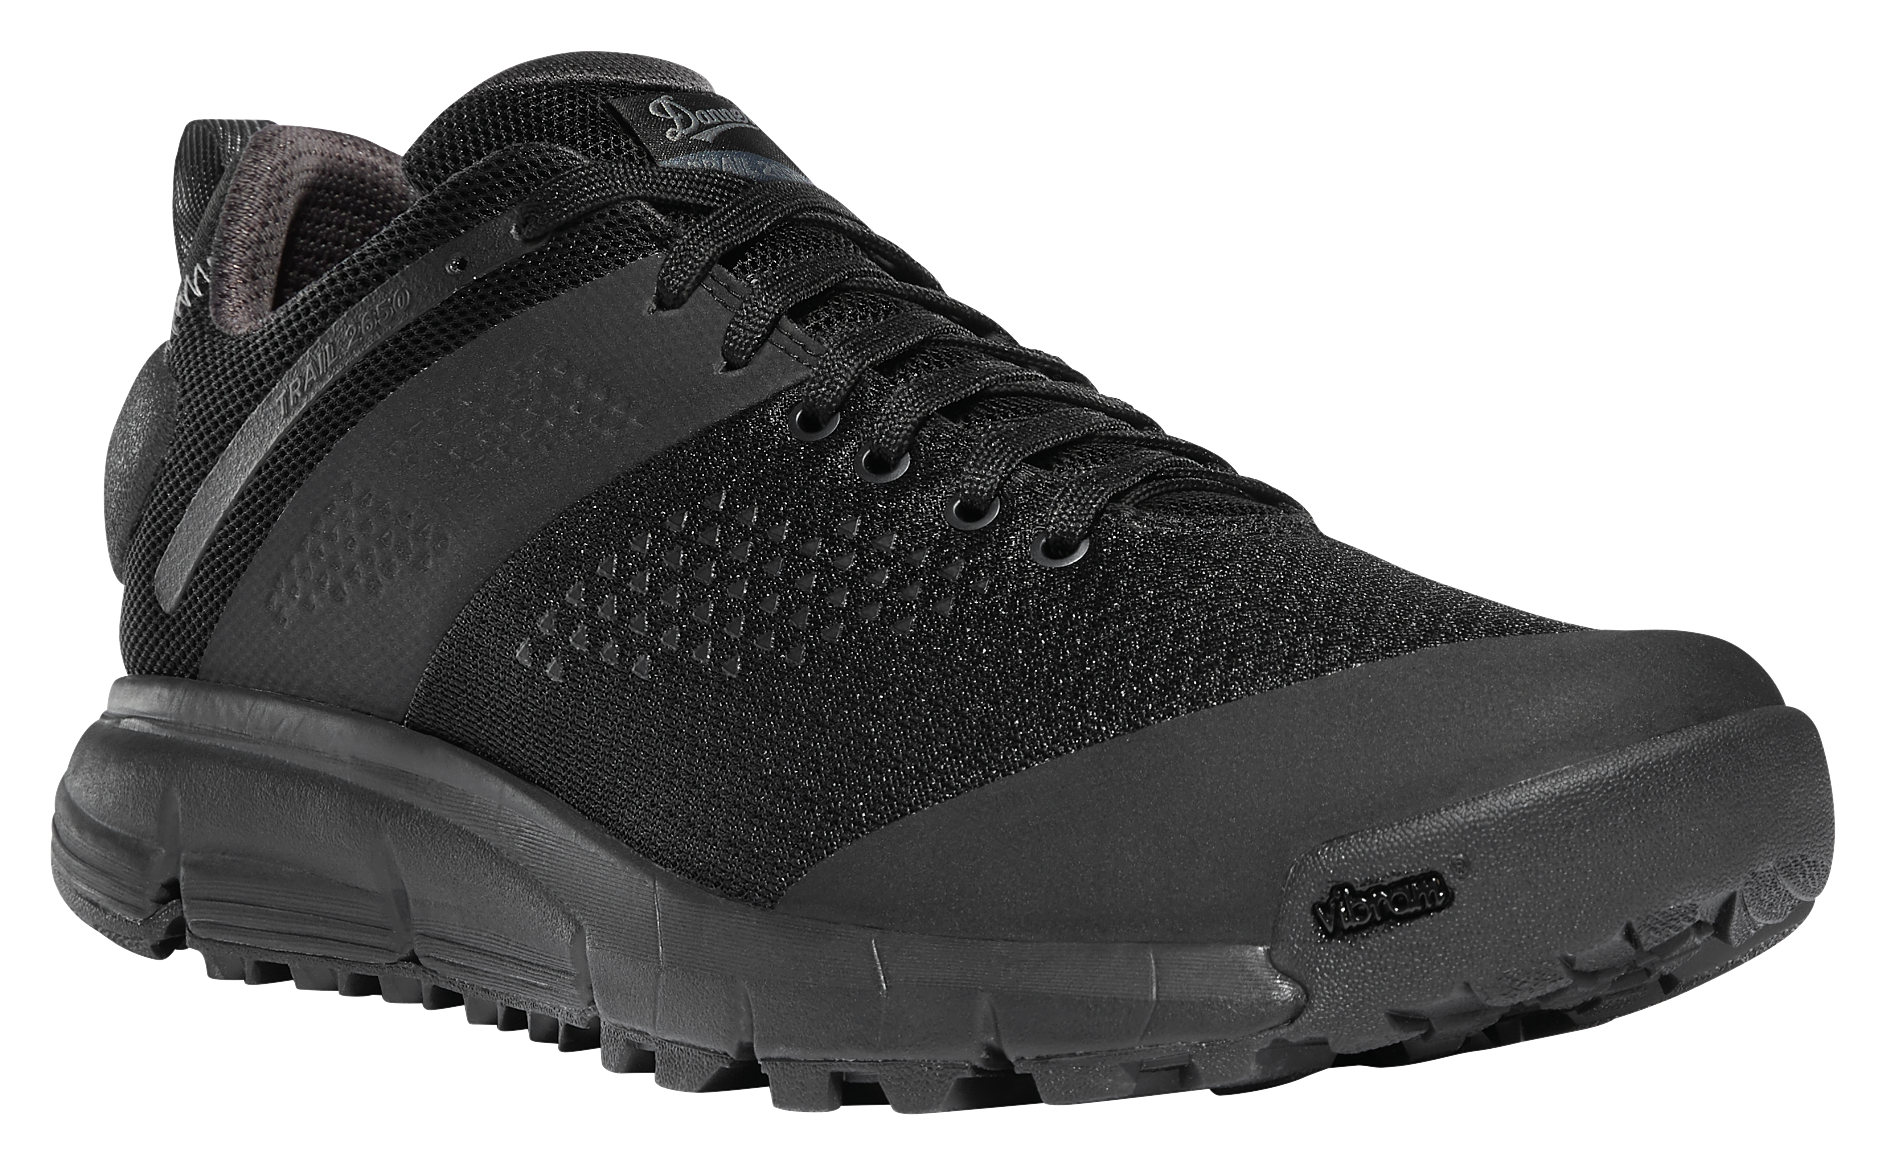 Danner Trail 2650 Mesh Hiking Shoes for Men - Black Shadow - 8.5M